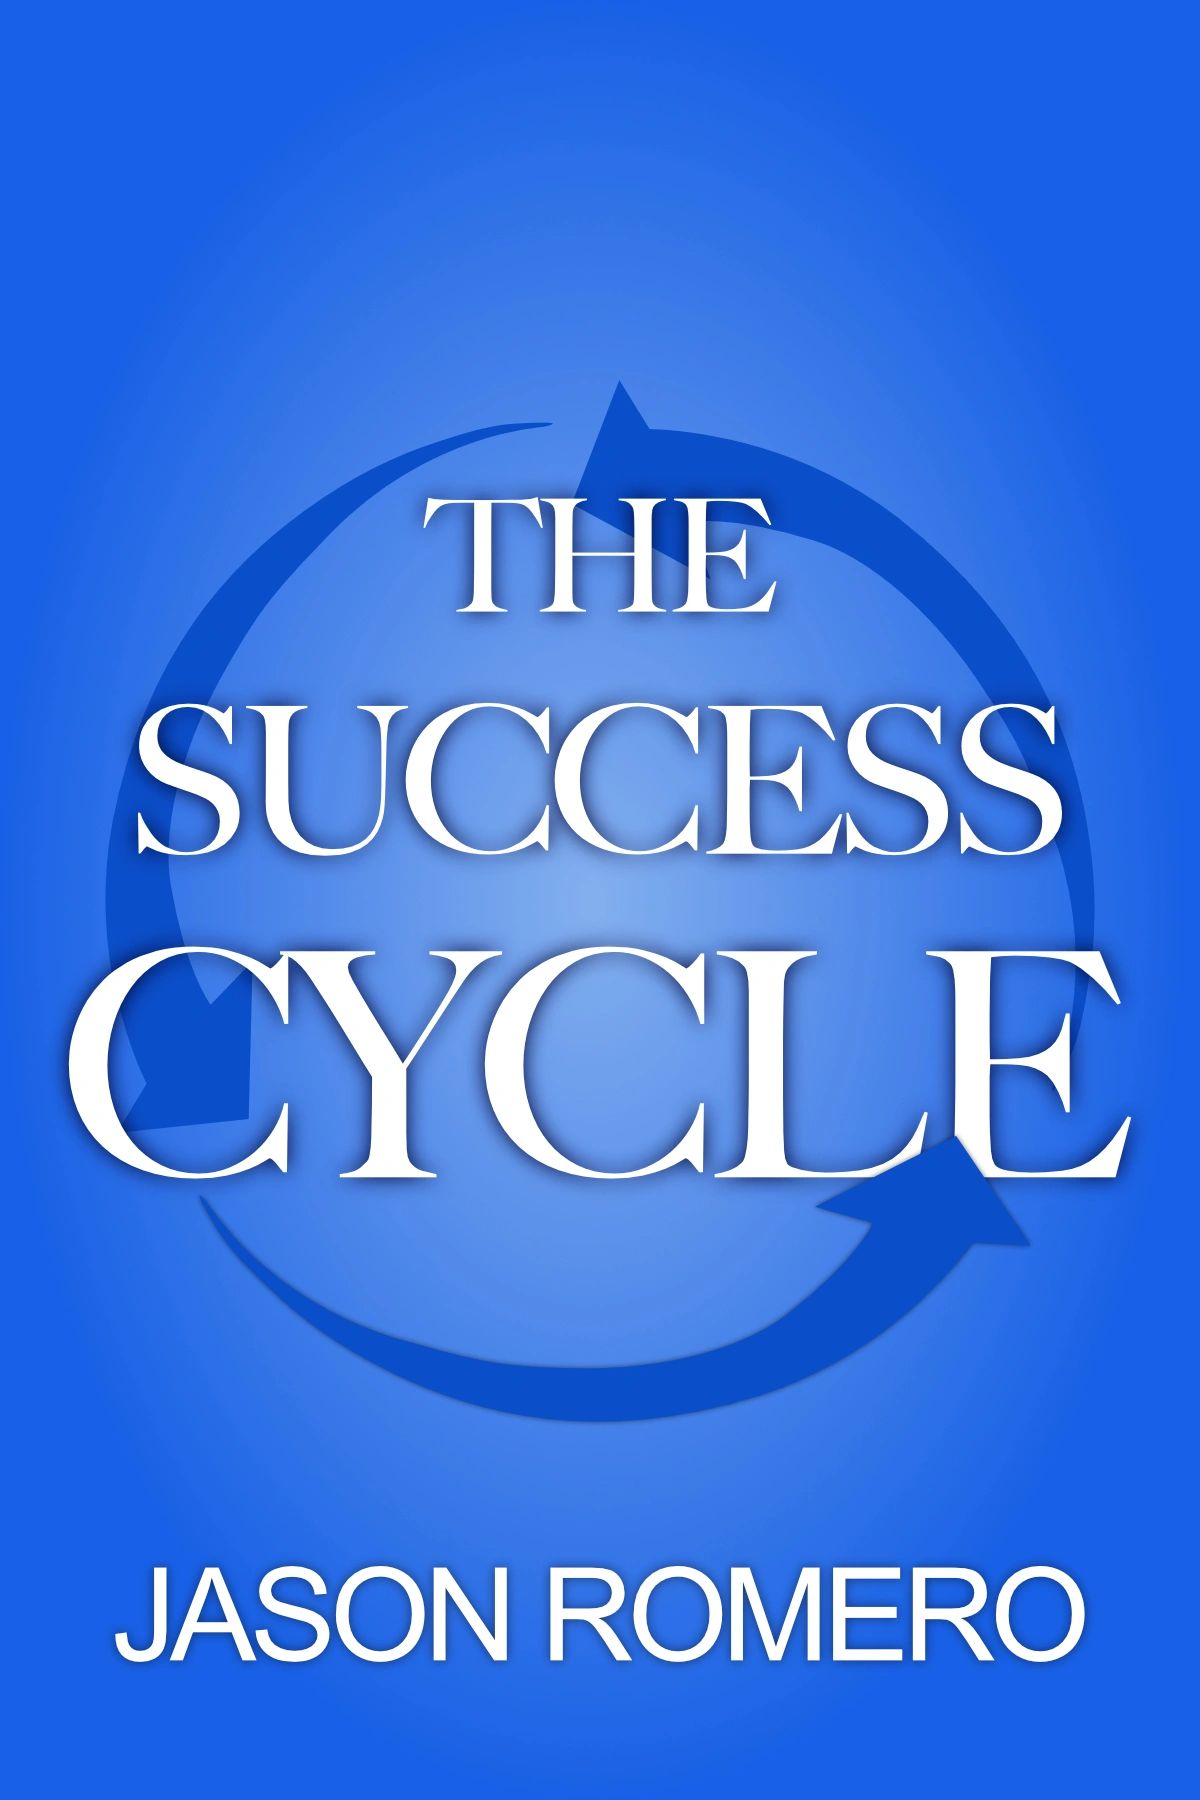 The Success Cycle by Jason Romero